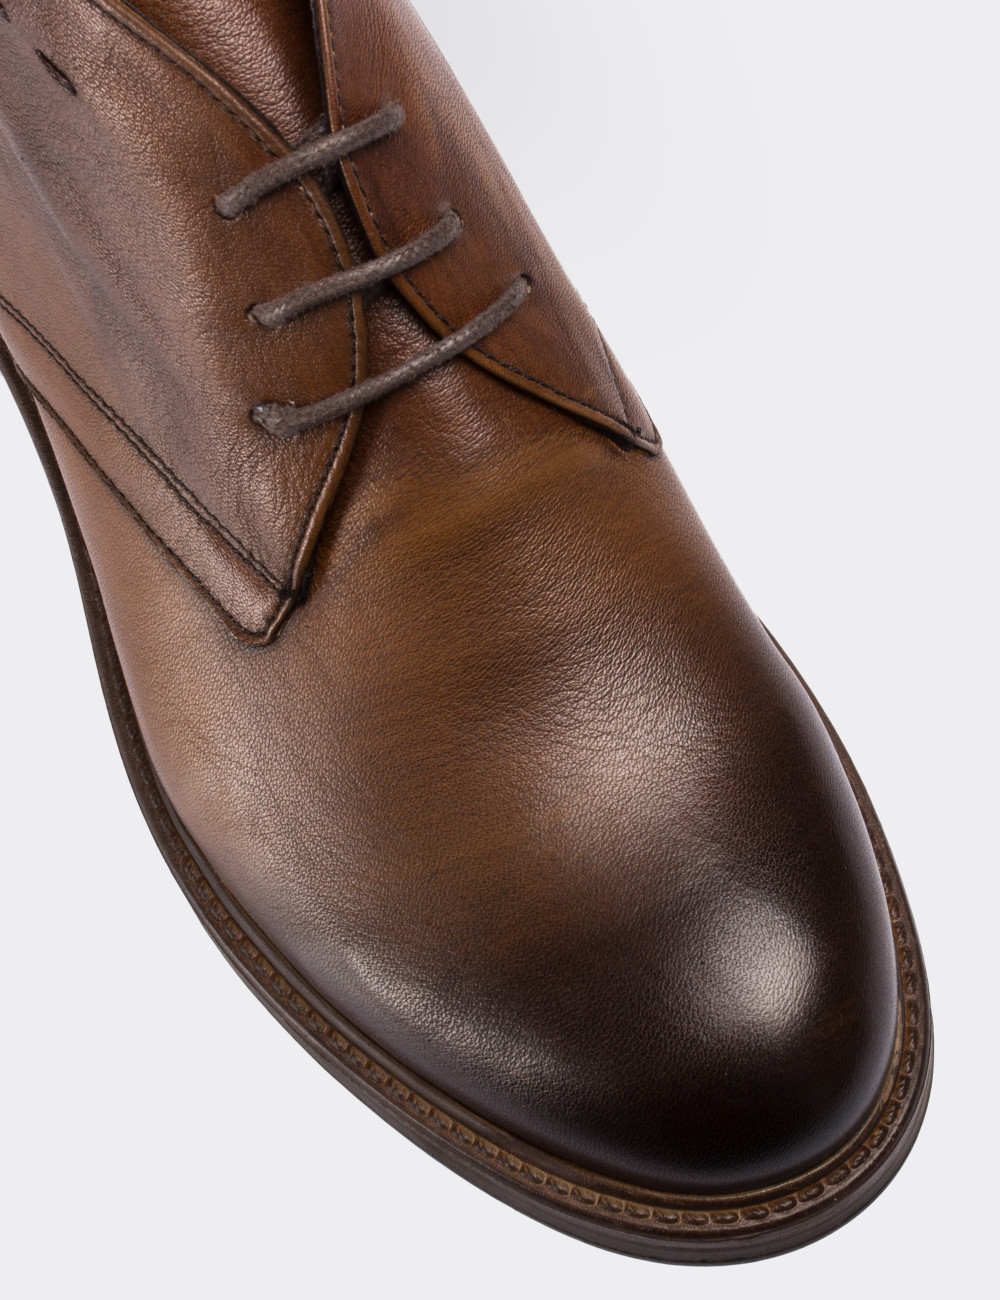 Tan  Leather Vintage Desert Boots - 01295MTBAC04